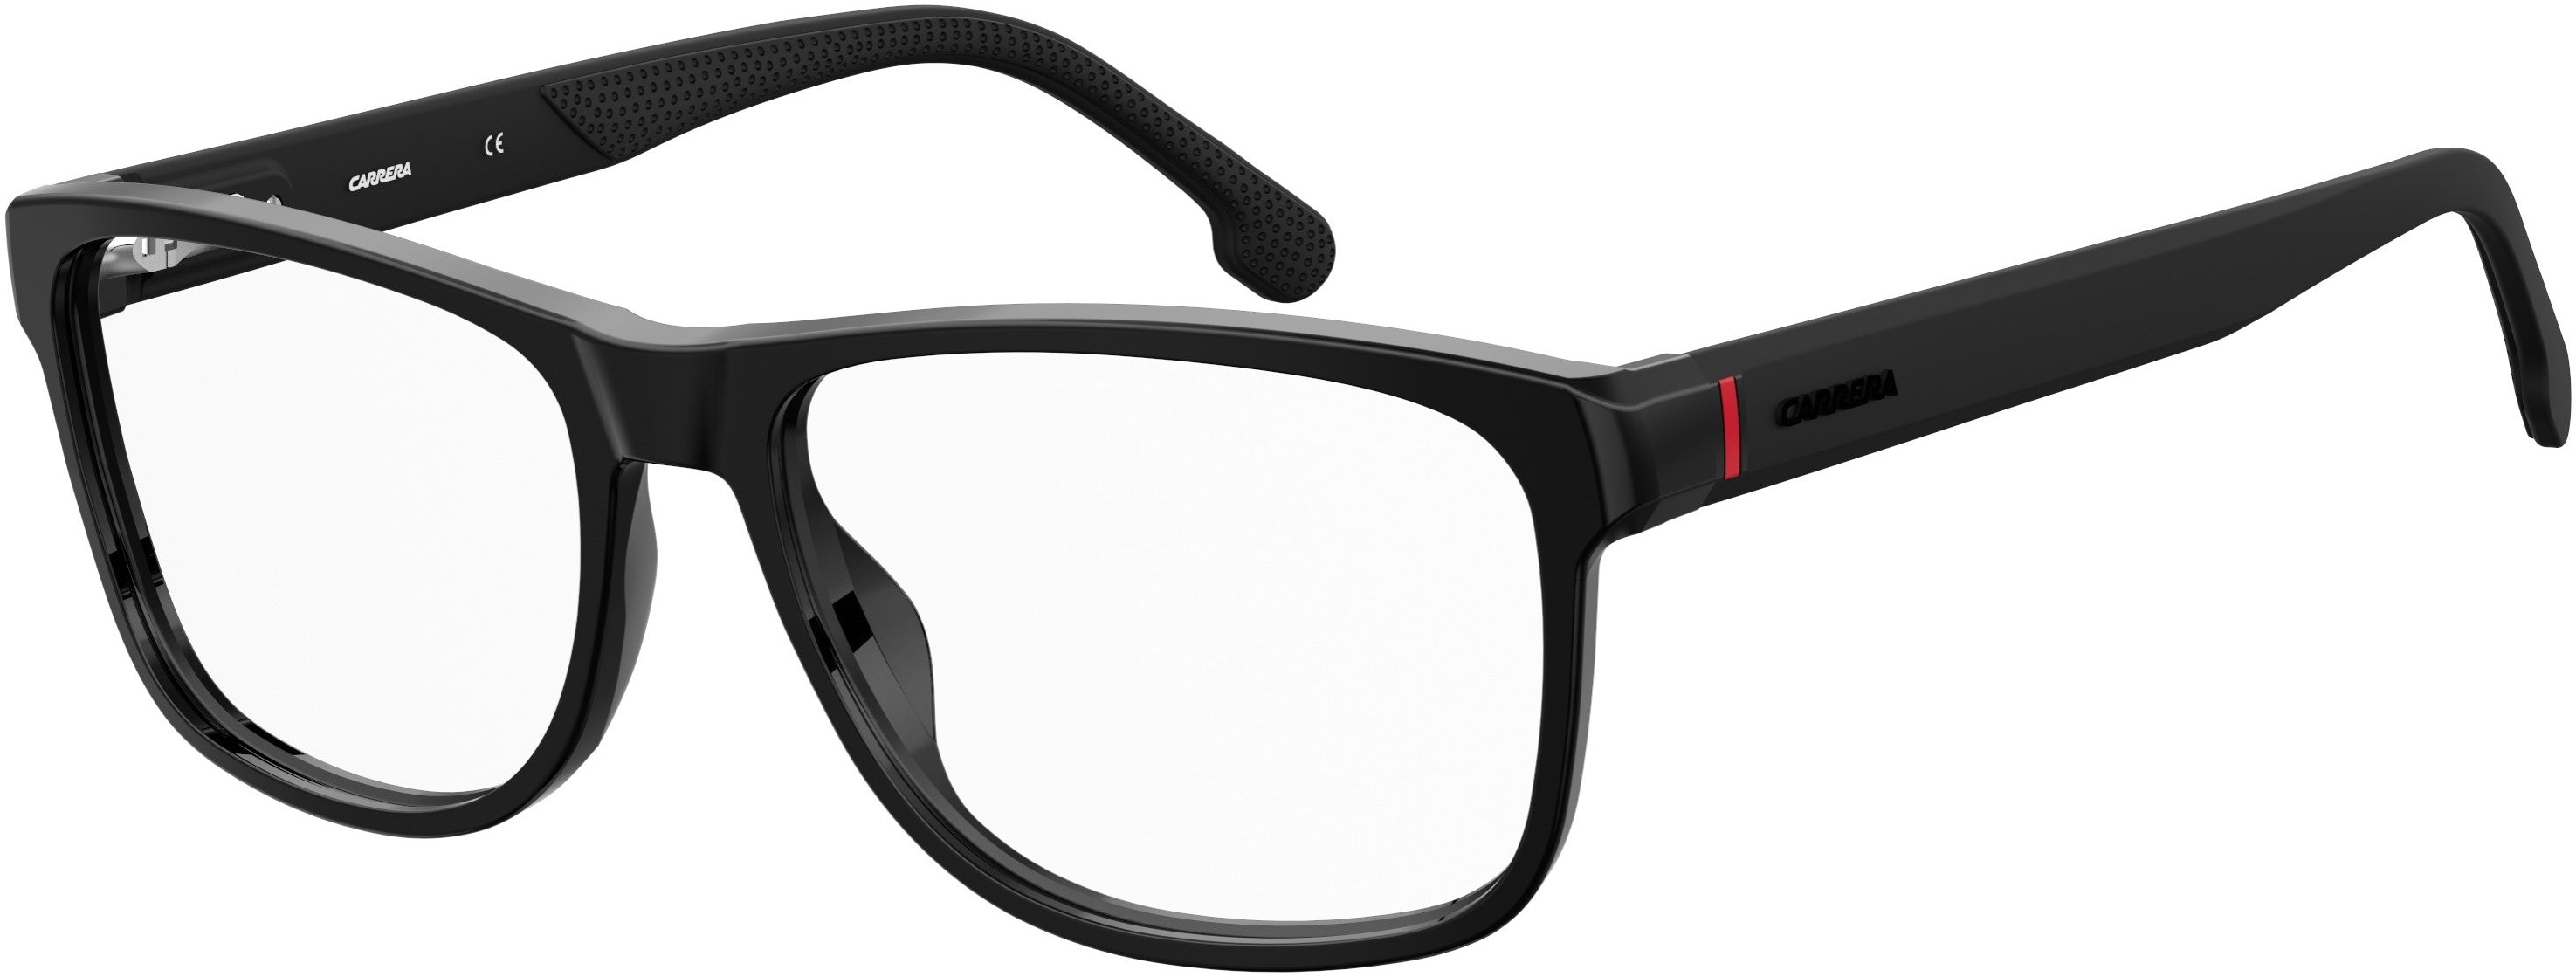  Carrera 8851 Rectangular Eyeglasses 0807-0807  Black (00 Demo Lens)